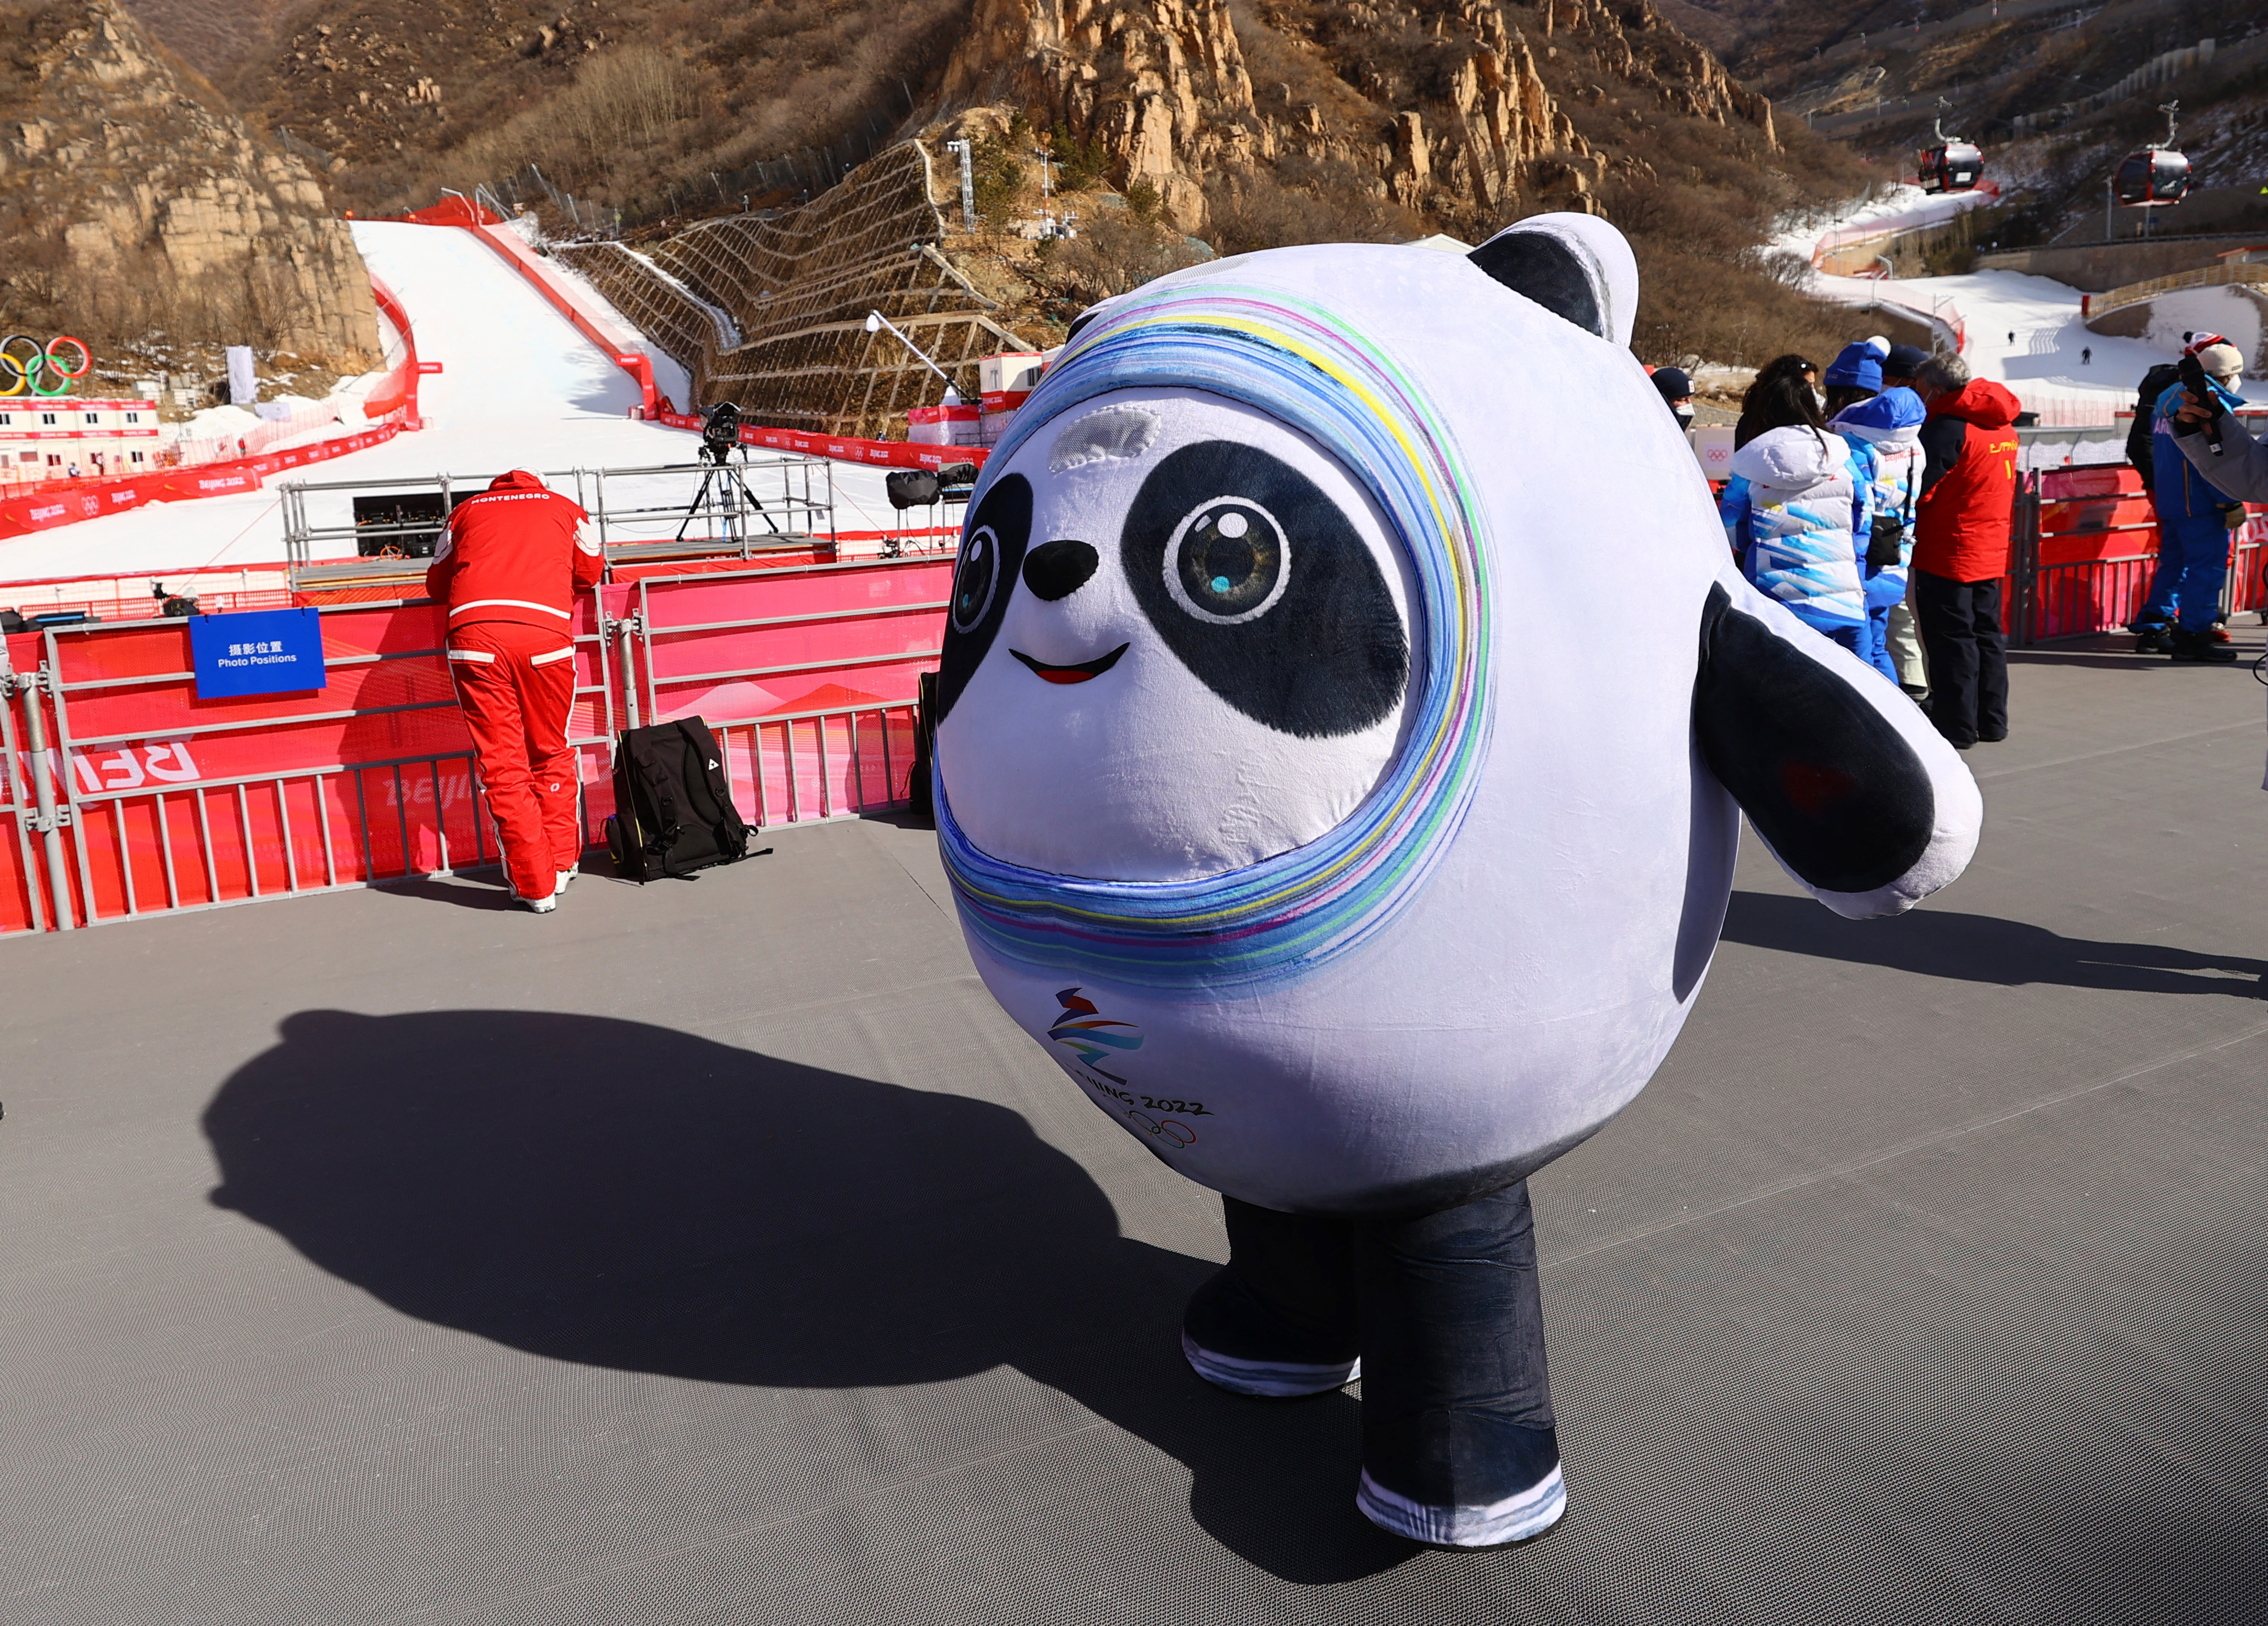 Where’s Bing Dwen Dwen? Popular Olympic mascot is sold out